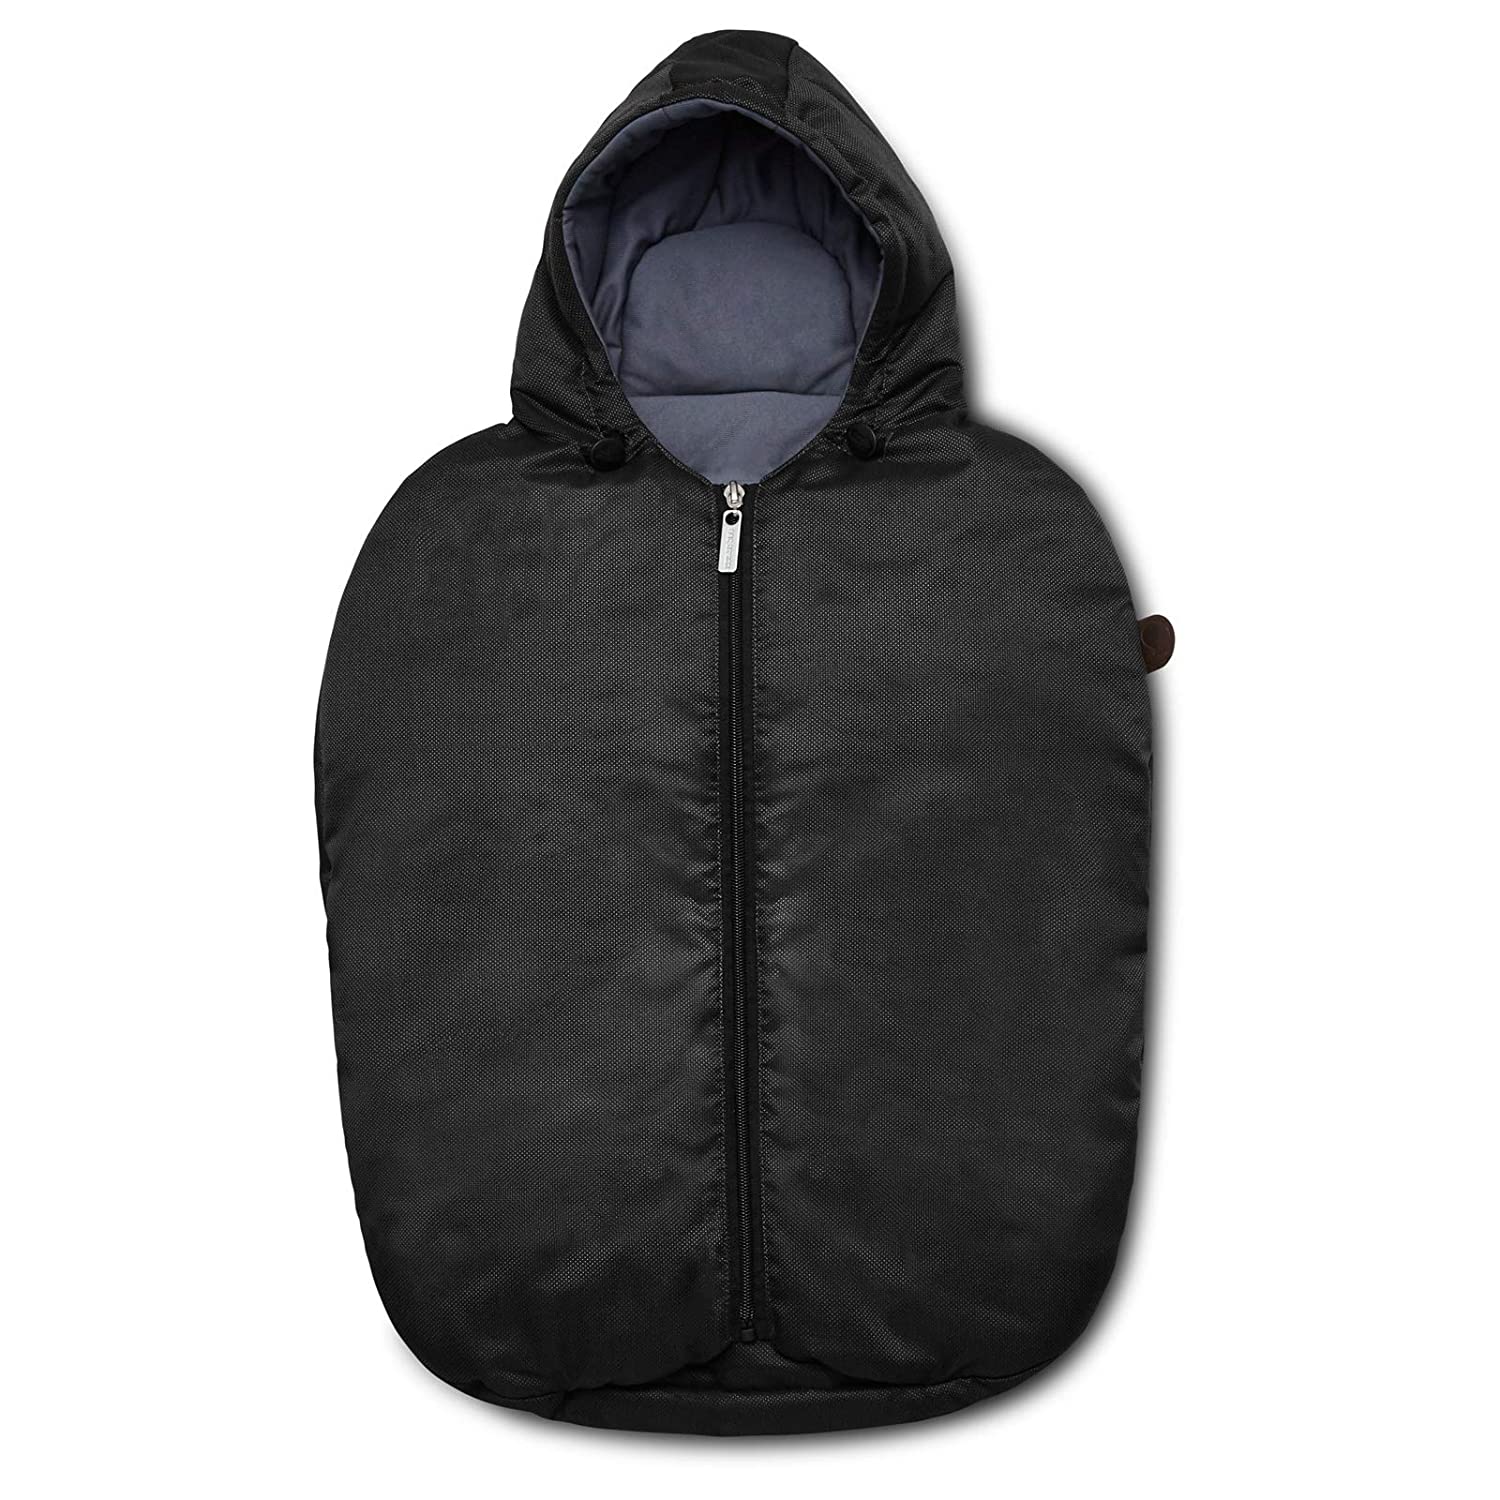 Abc Design - Unisex sleeping bags